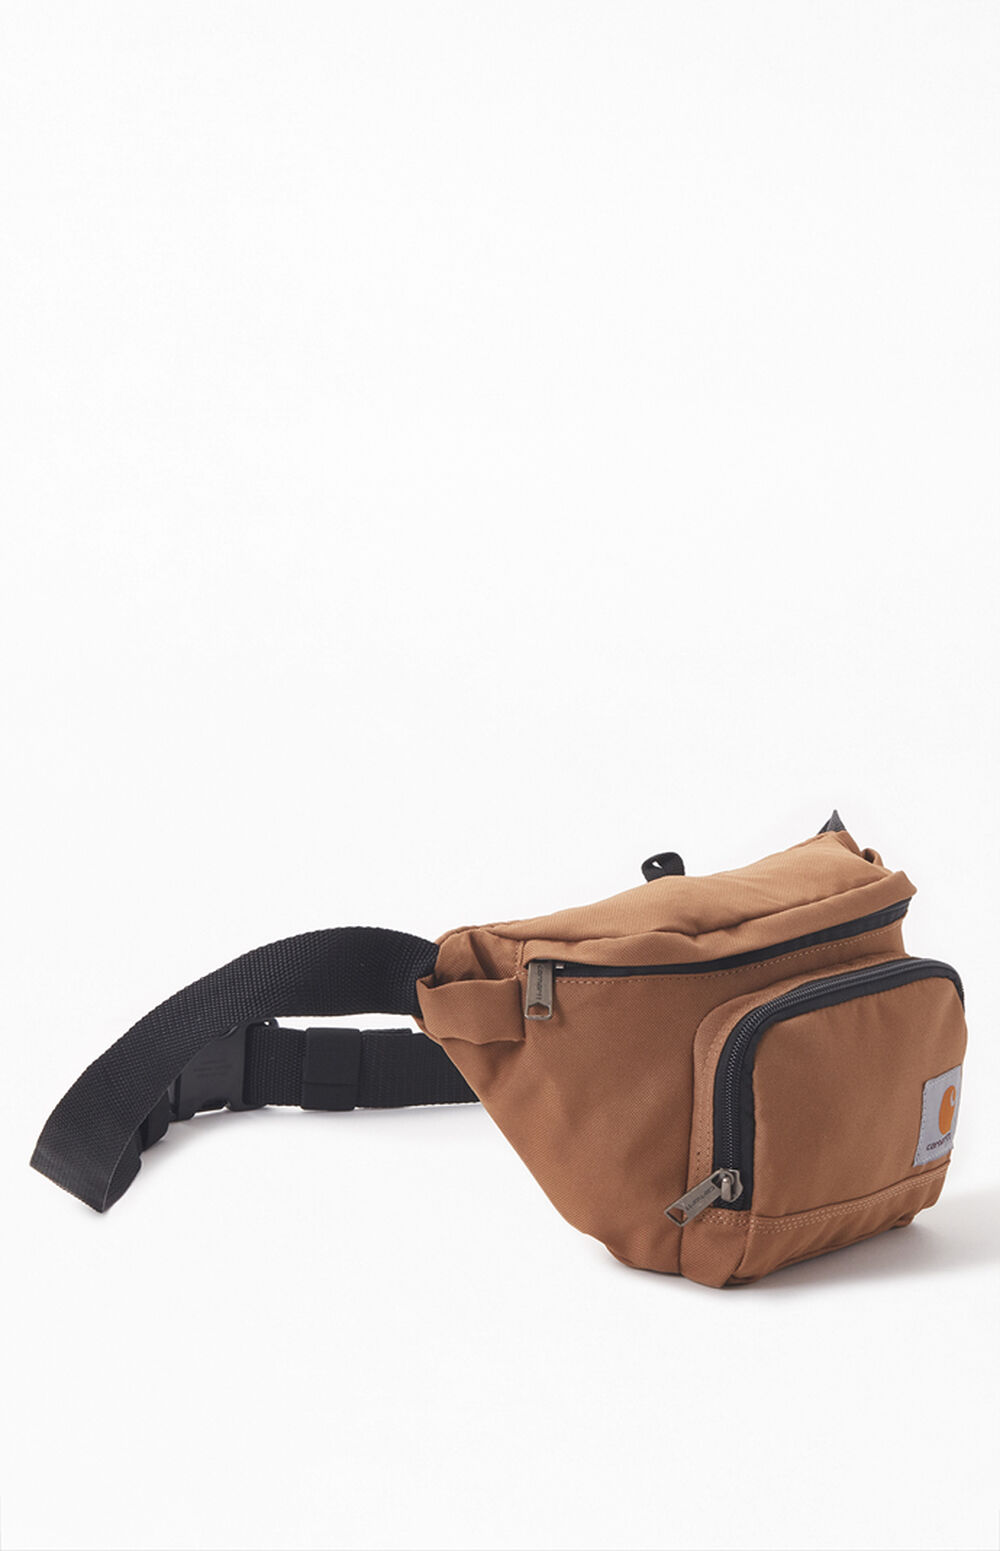 Carhartt Sling Bag | PacSun